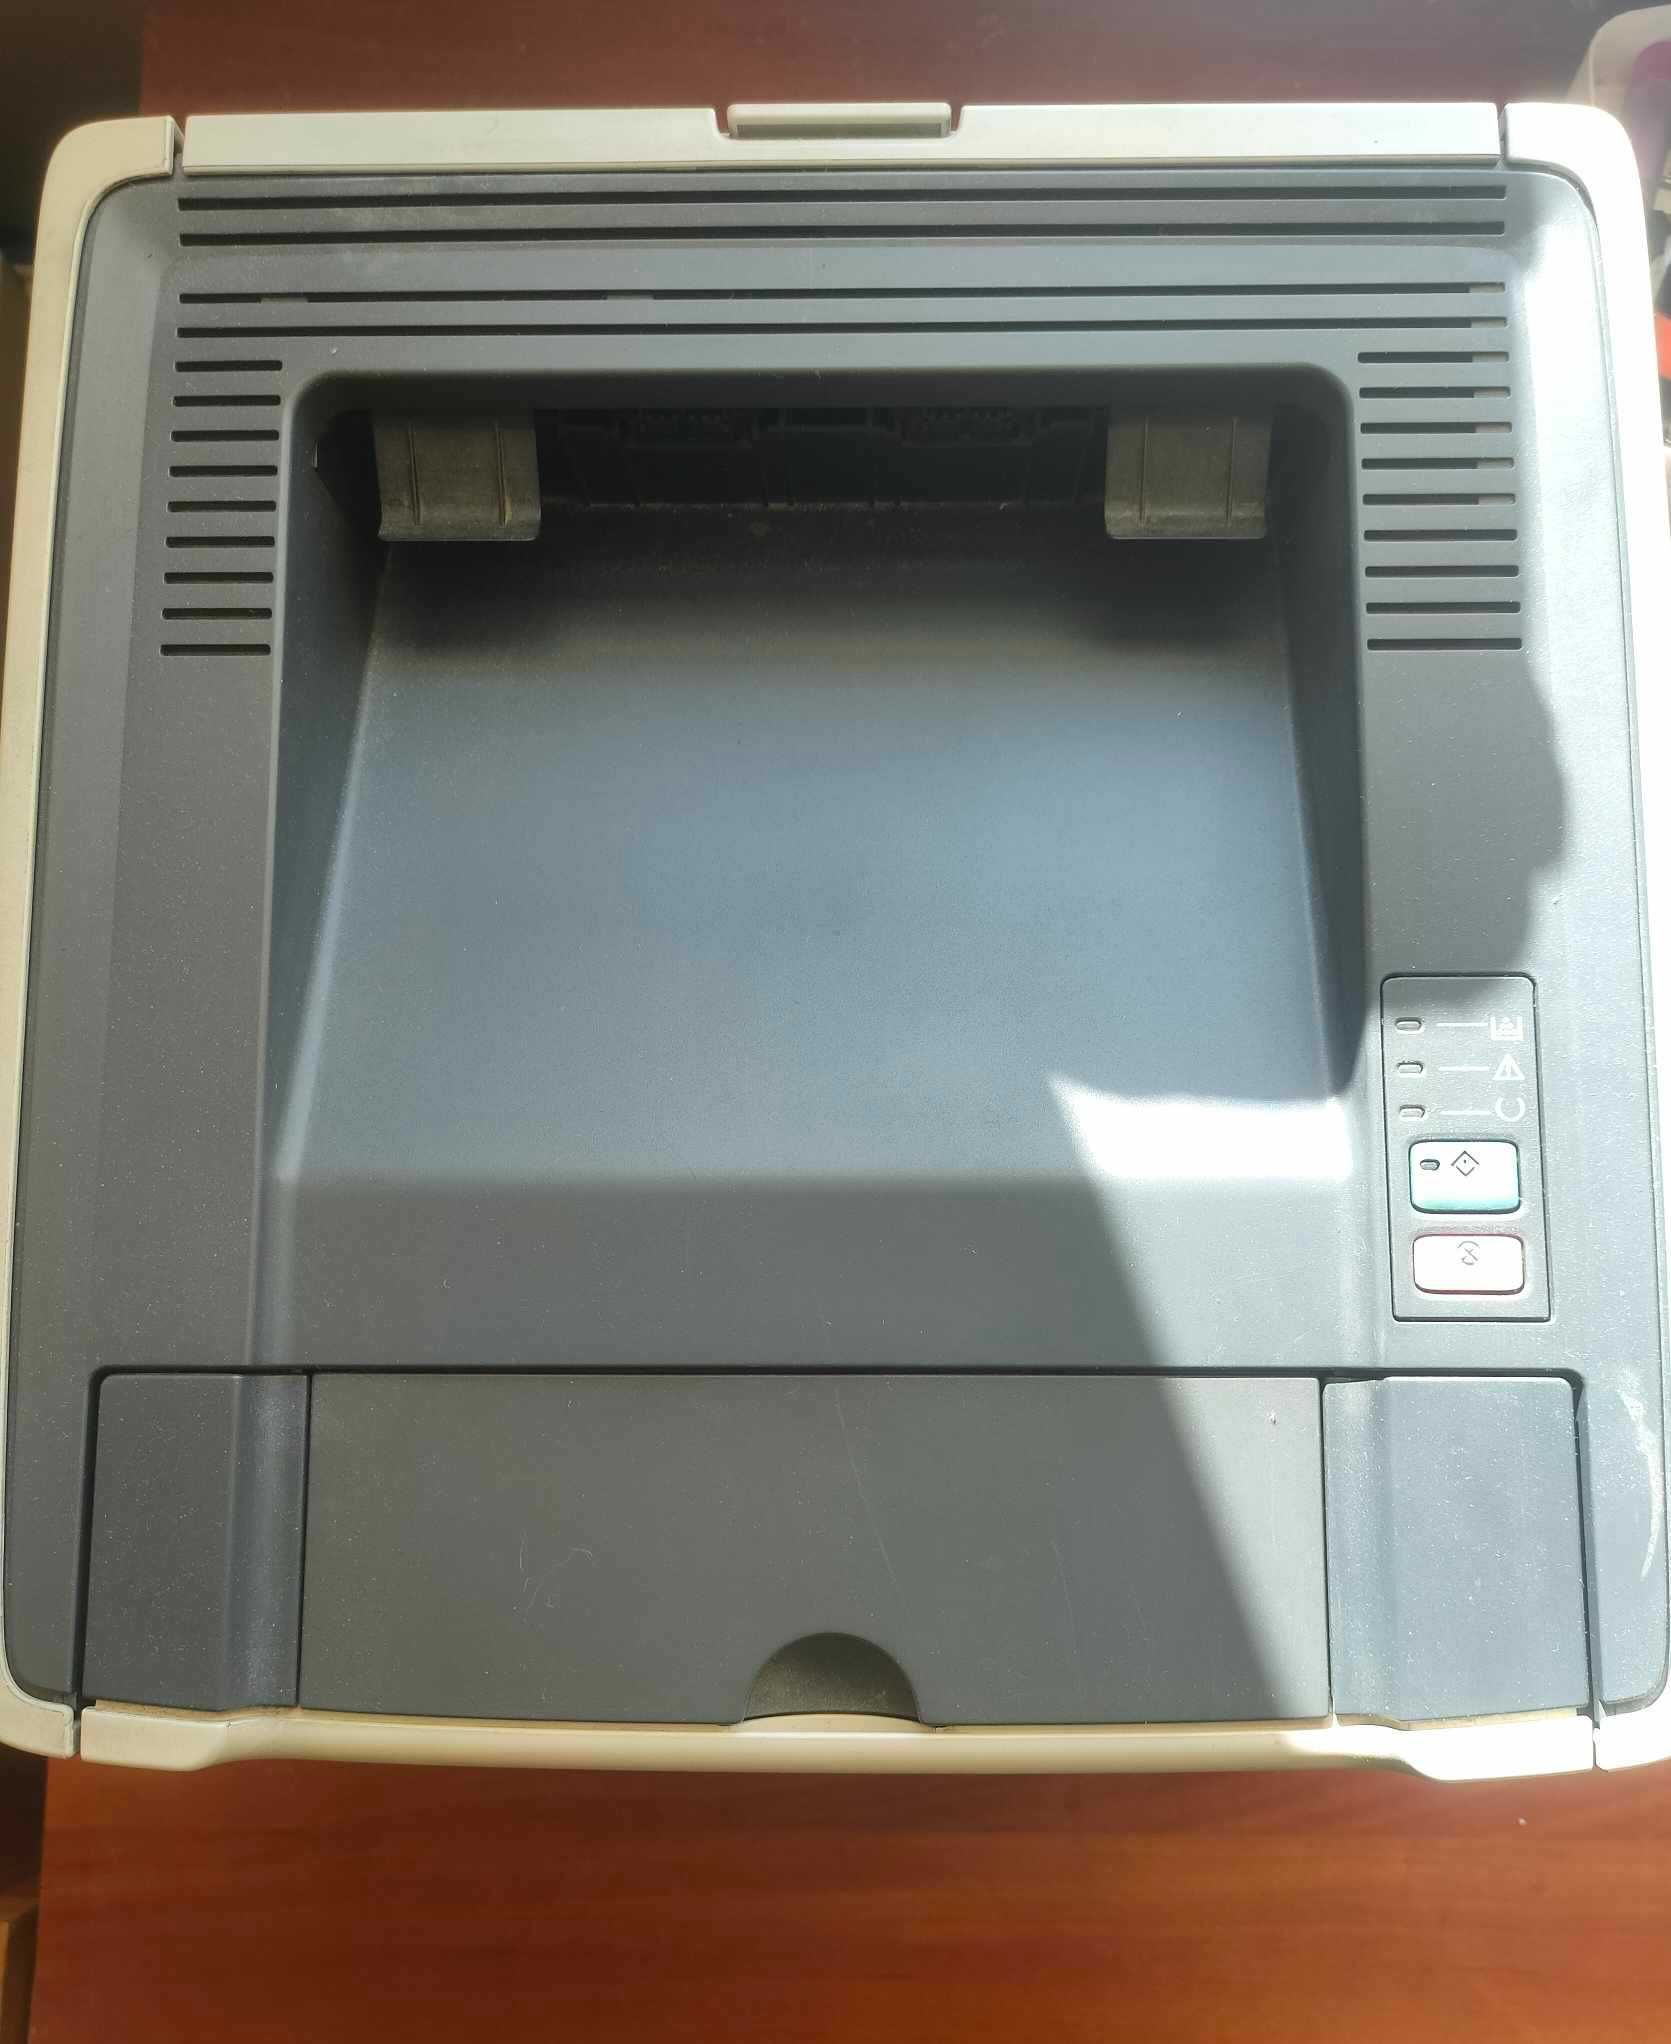 Лазарен принтер HP LaserJet 1320